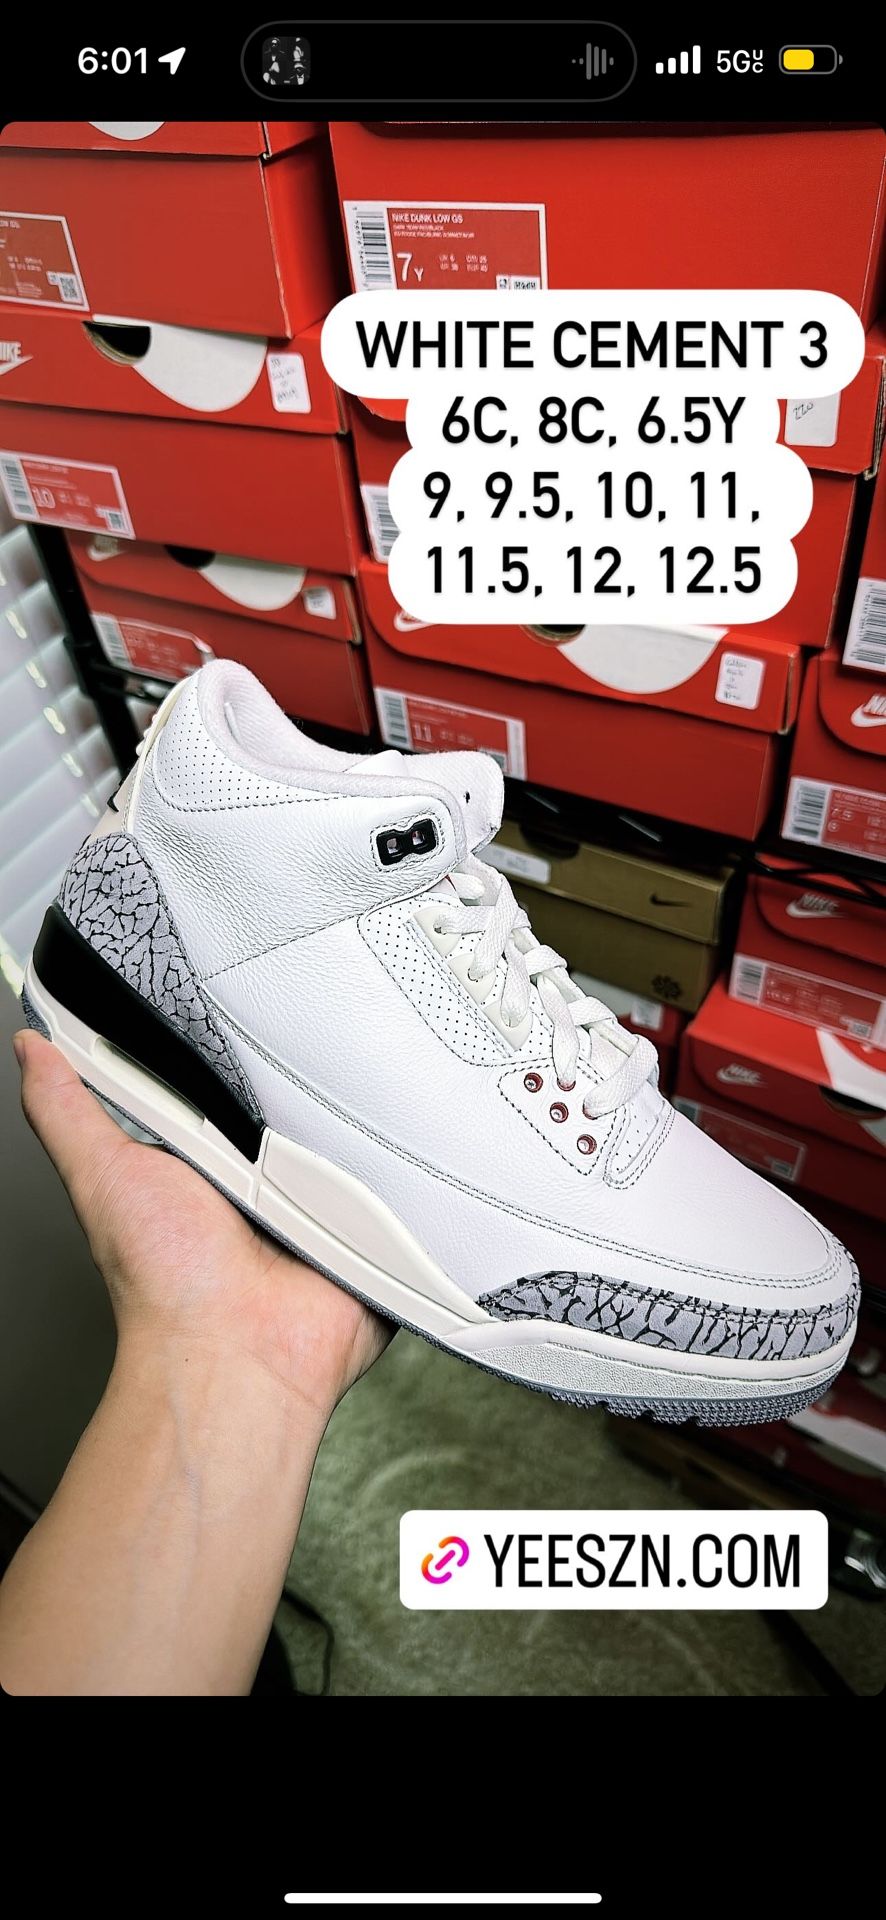 Nike Air Jordan 3 White Cement 6c 8c 6.5y 9 9.5 10 11 11.5 12 12.5 13